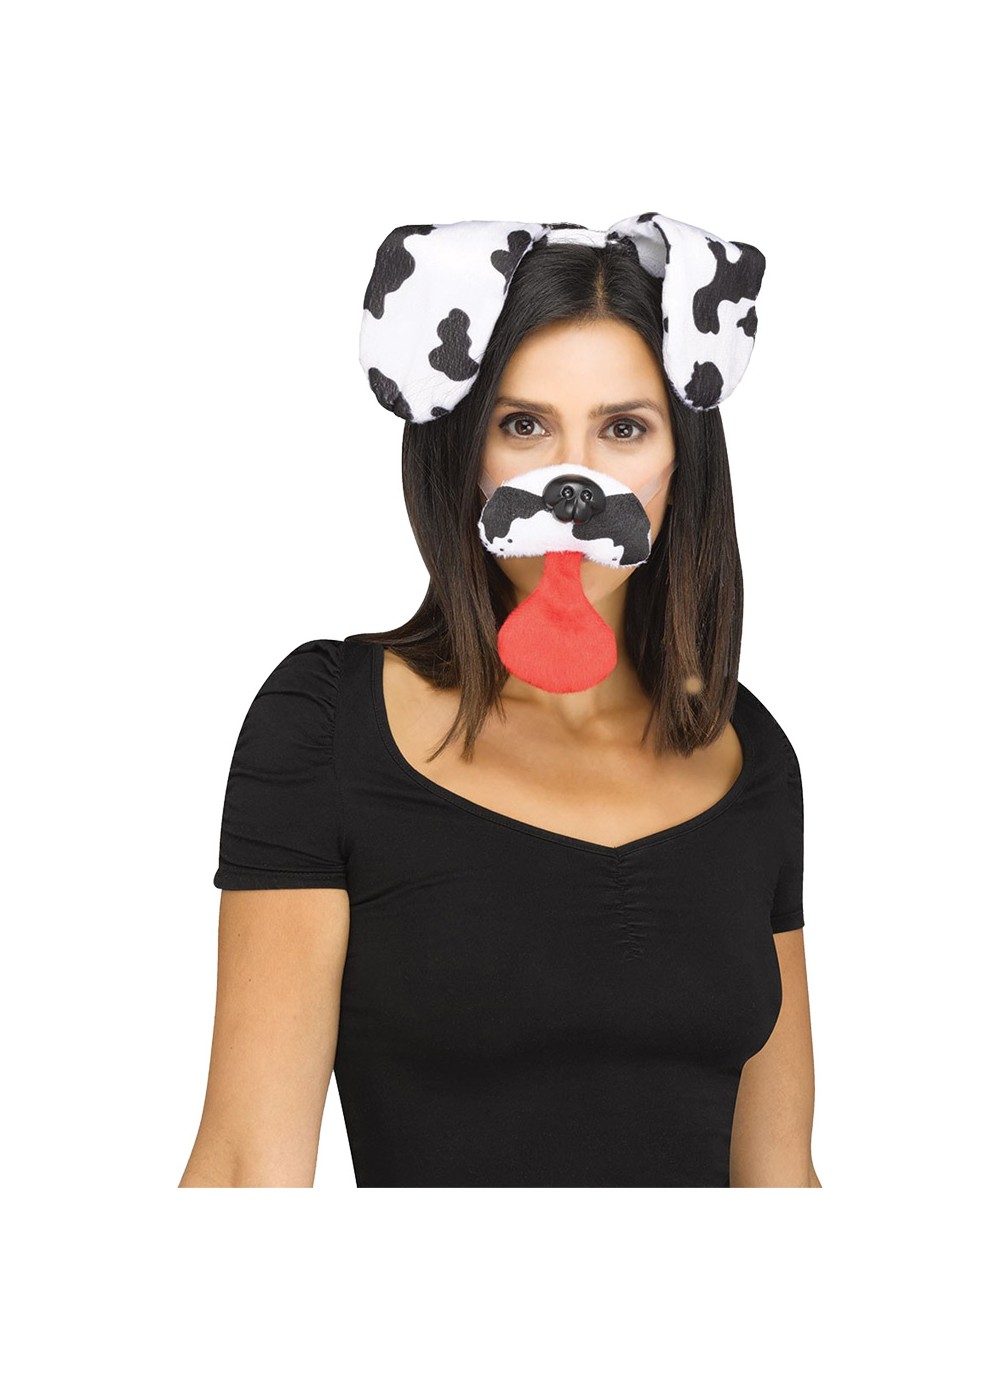 Snapchat Dalmatian Dog Filter Kit